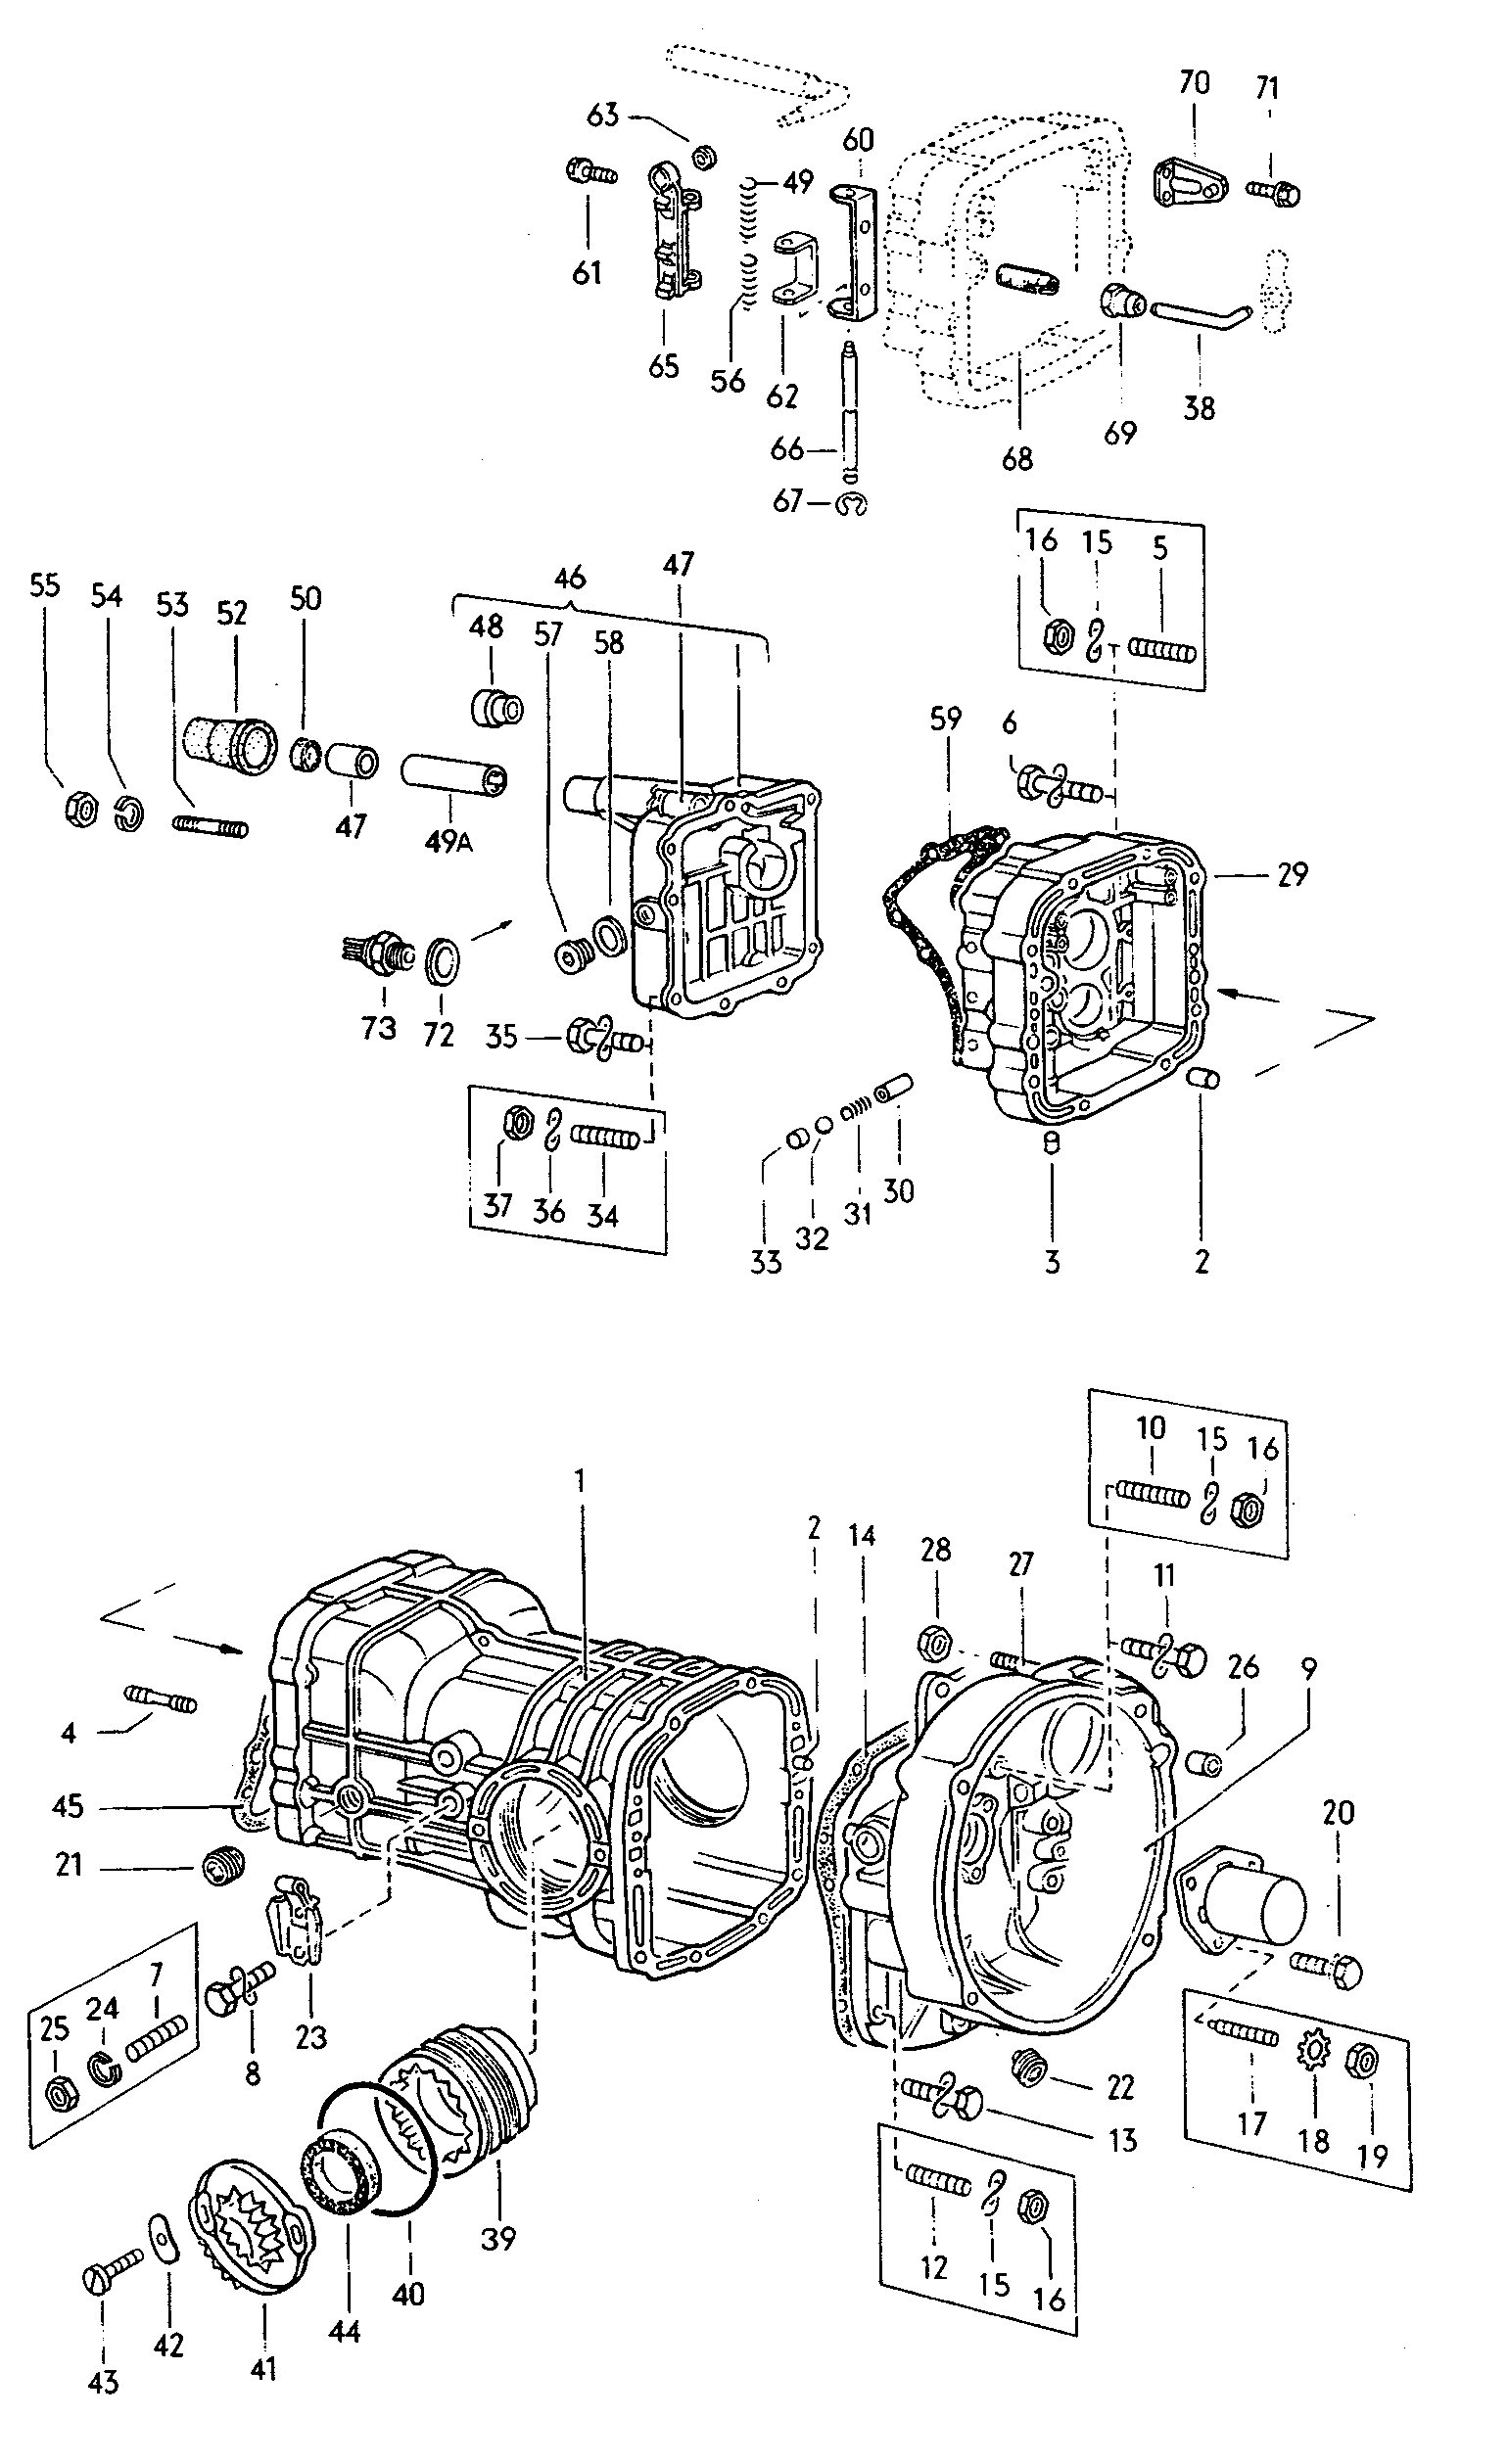 Getriebegehaeuse; Schaltgehaeuse - Typ 2/syncro(T2)  